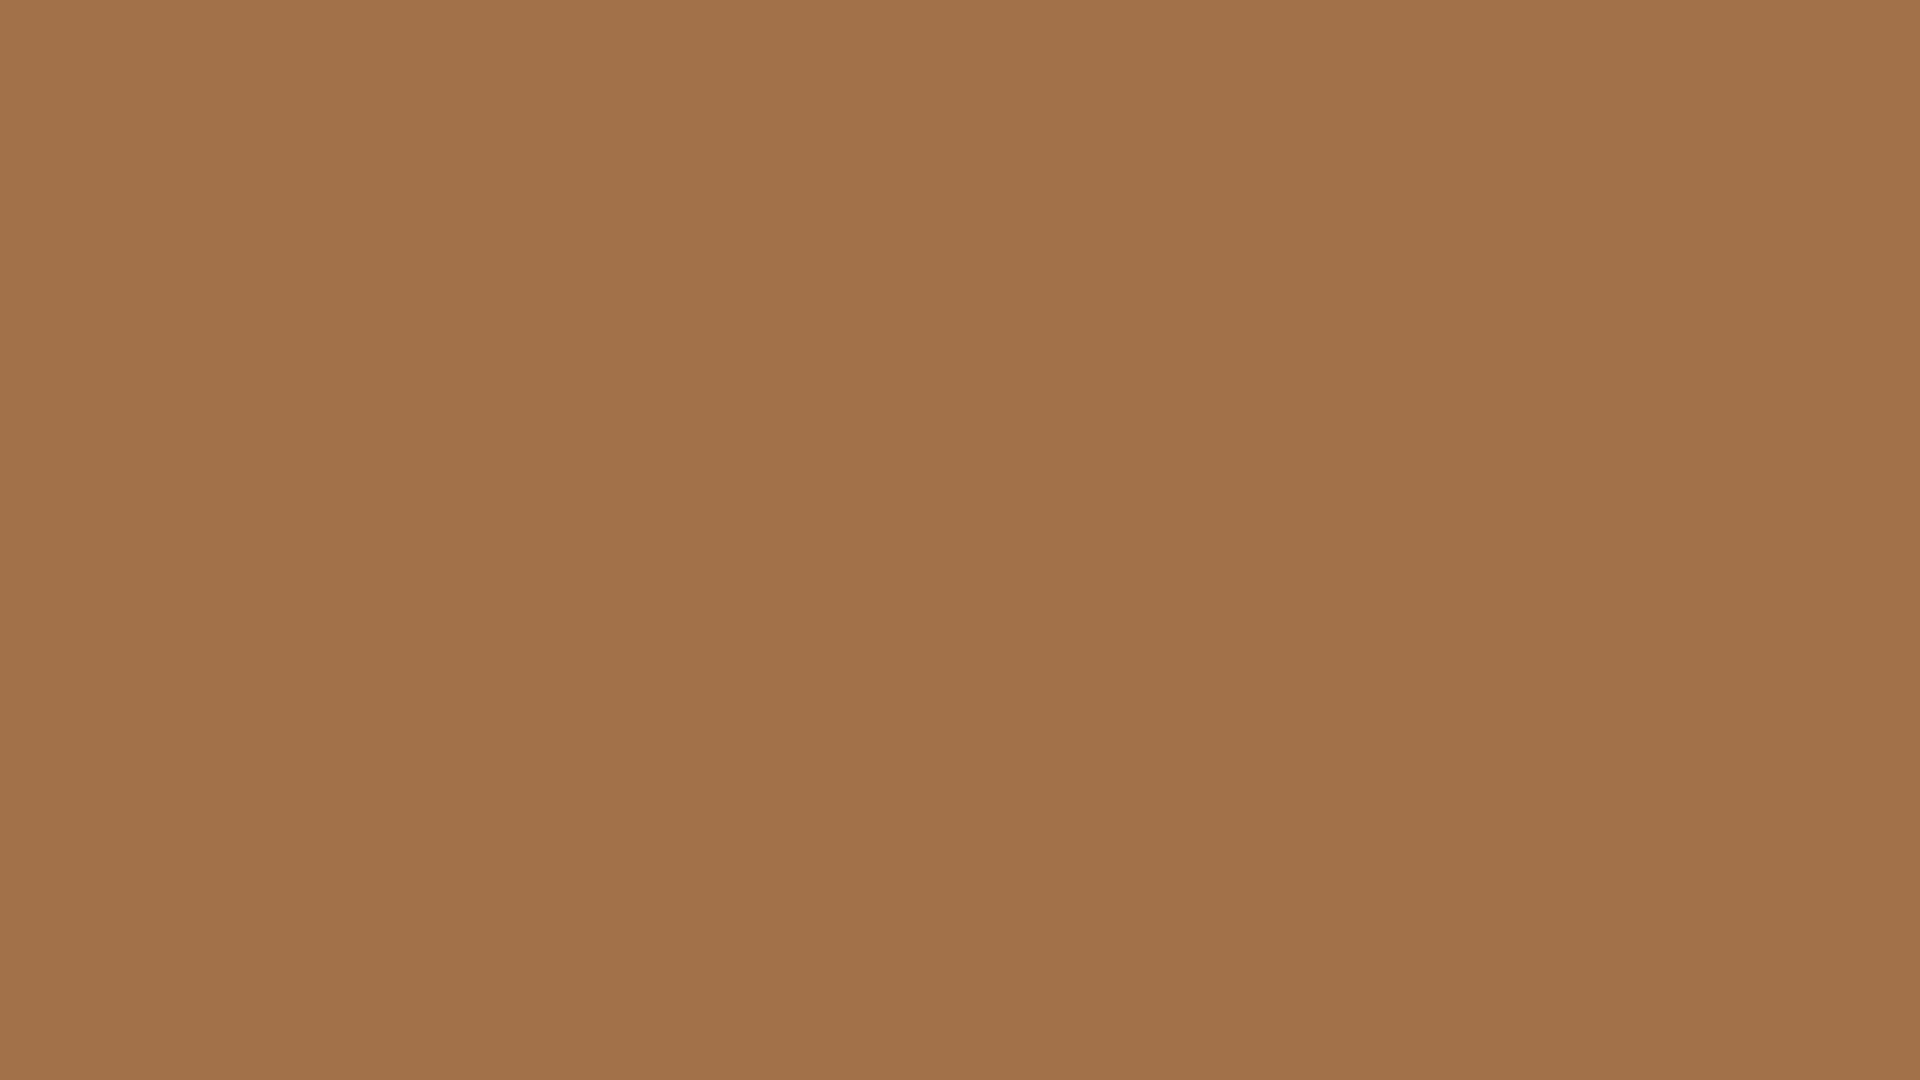 Soft and Elegant Light Brown Background